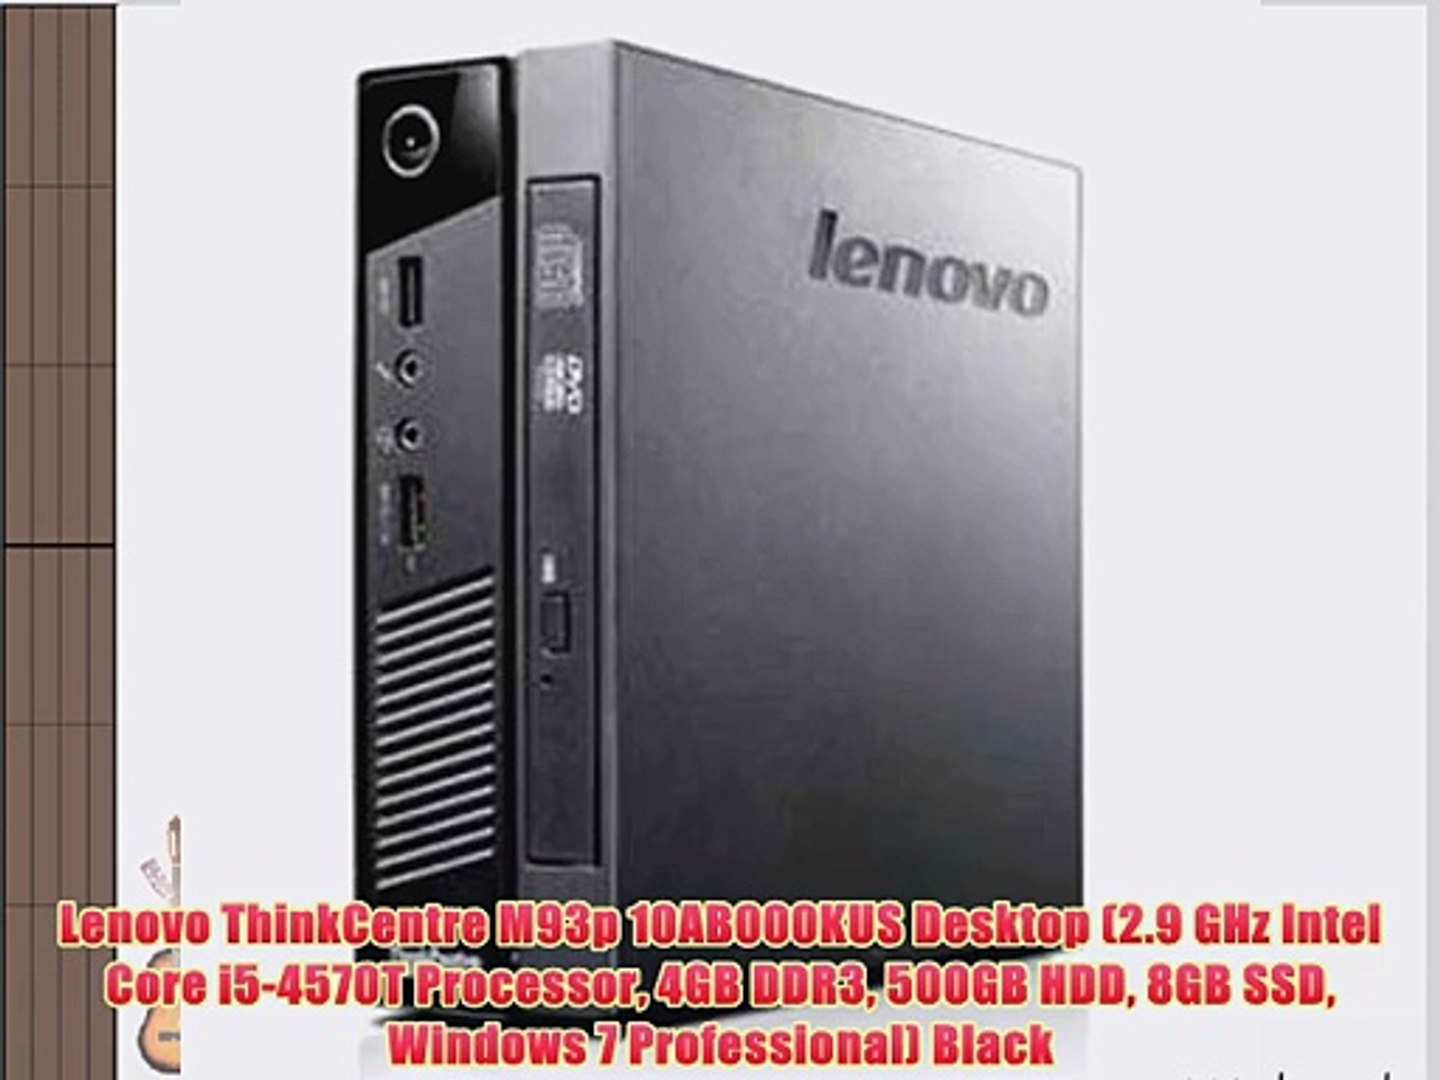 Lenovo Thinkcentre M93p 10ab000kus Desktop 2 9 Ghz Intel Core I5 4570t Processor 4gb Ddr3 Video Dailymotion